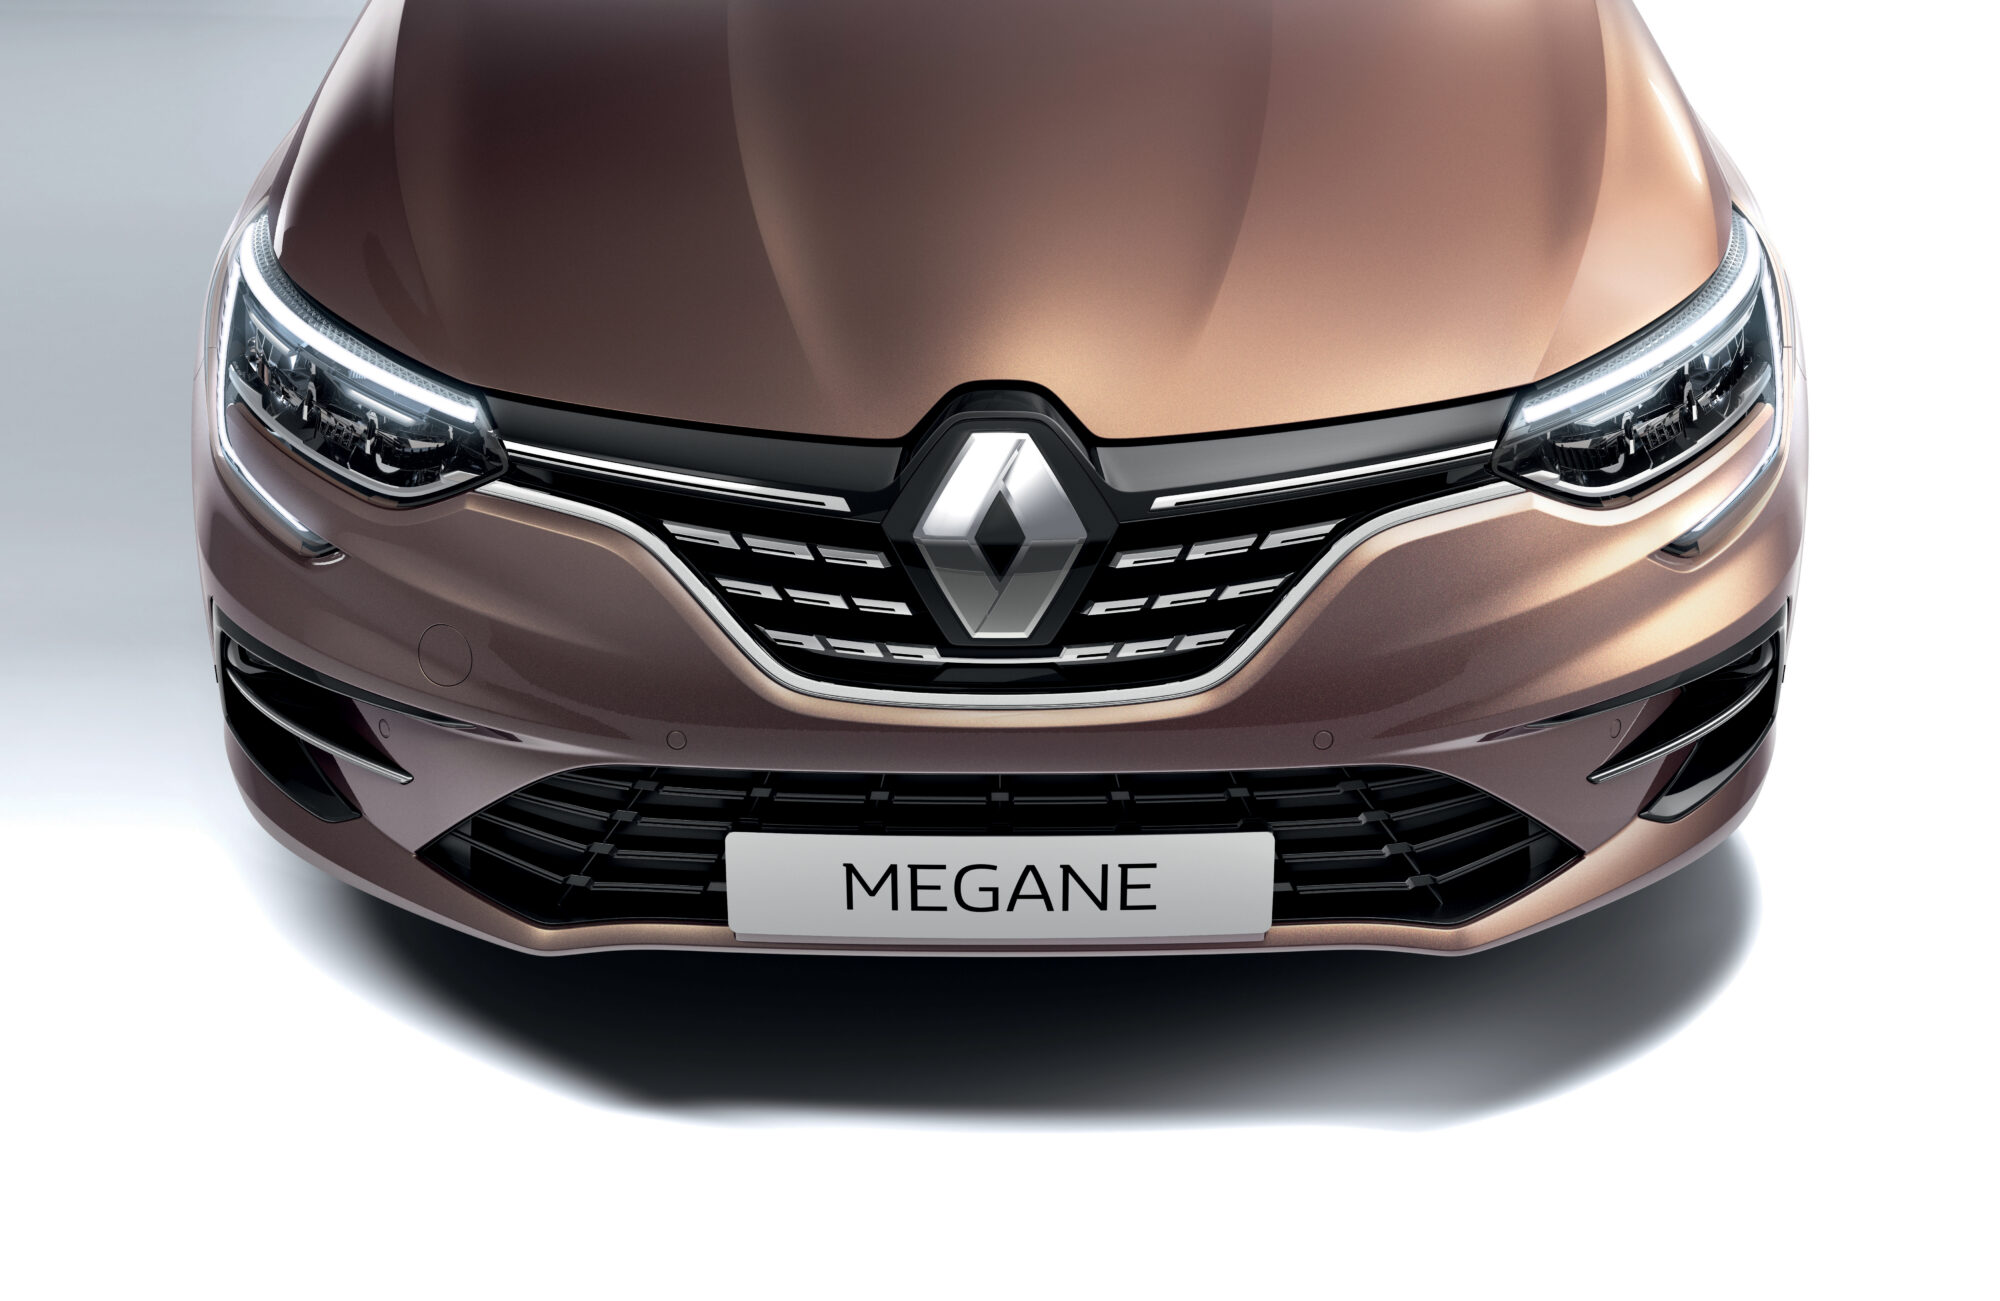 2020 - New Renault MEGANE